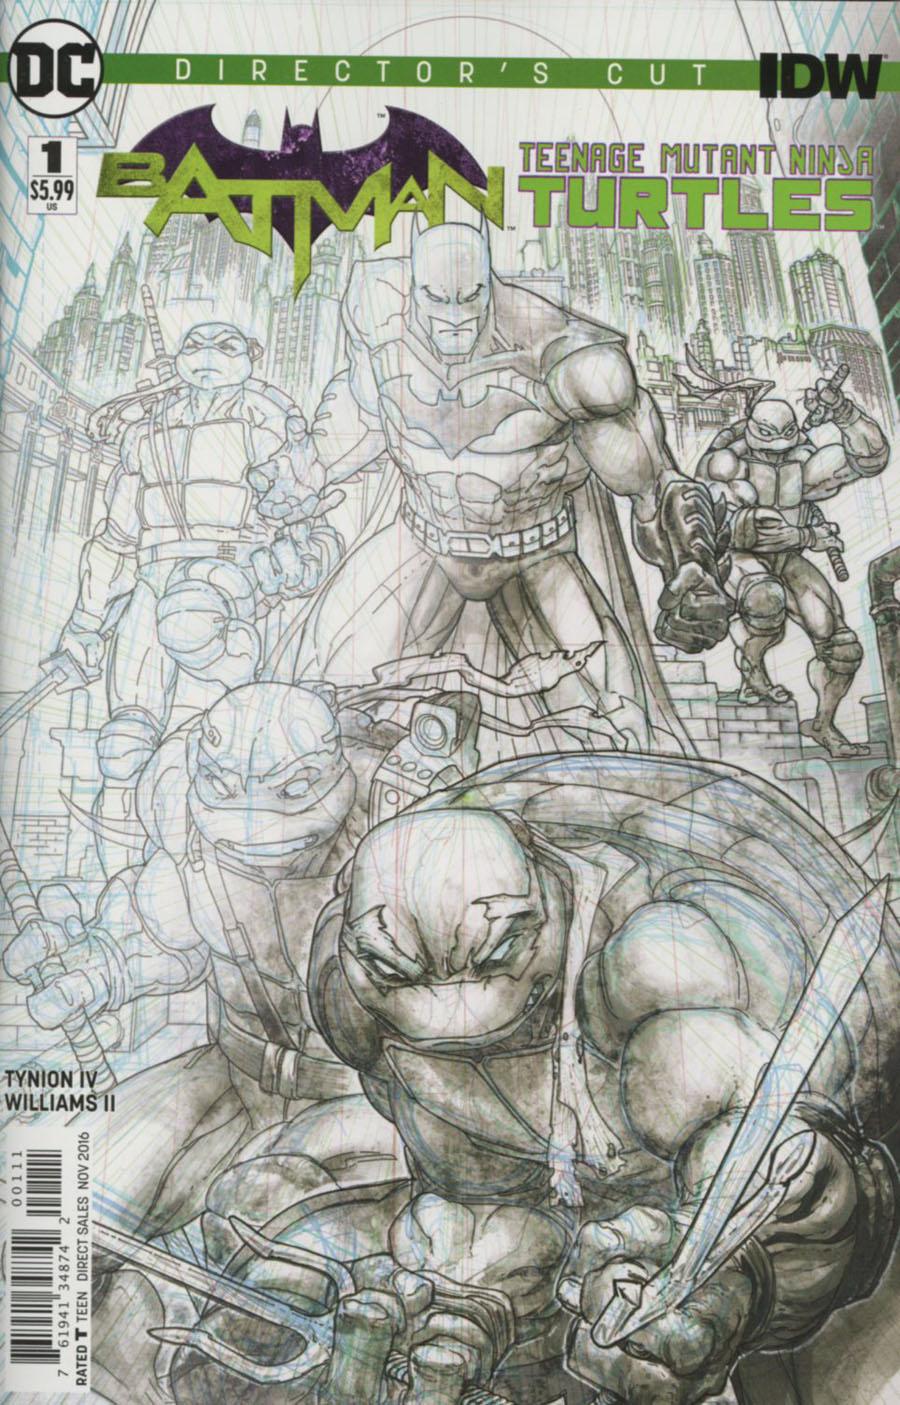 Batman Teenage Mutant Ninja Turtles Directors Cut Vol. 1 #1